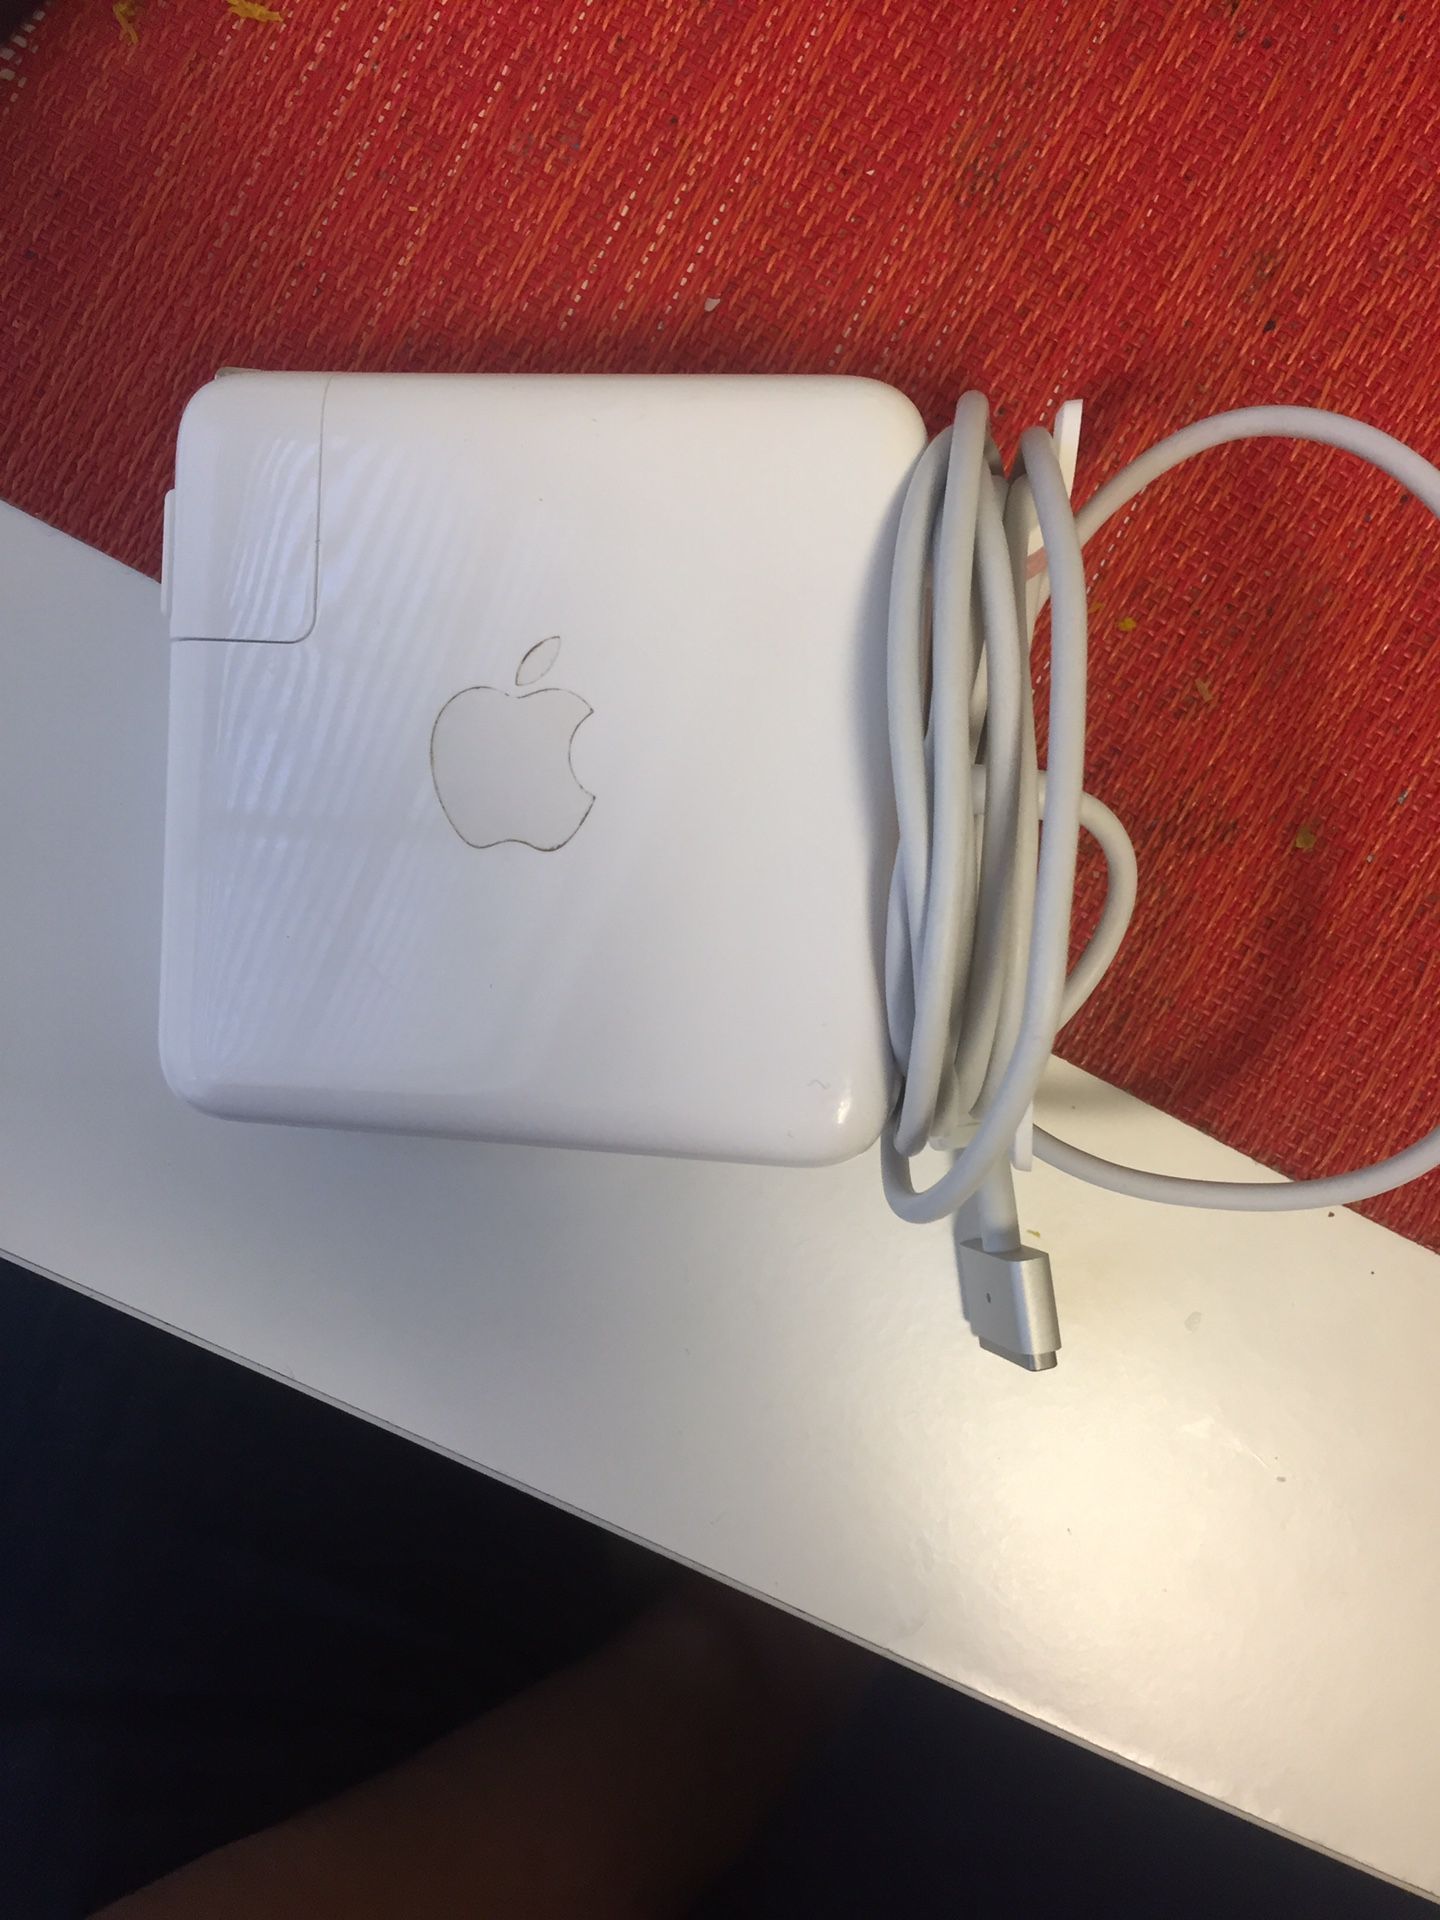 MacBook charger megasafe 2 85w